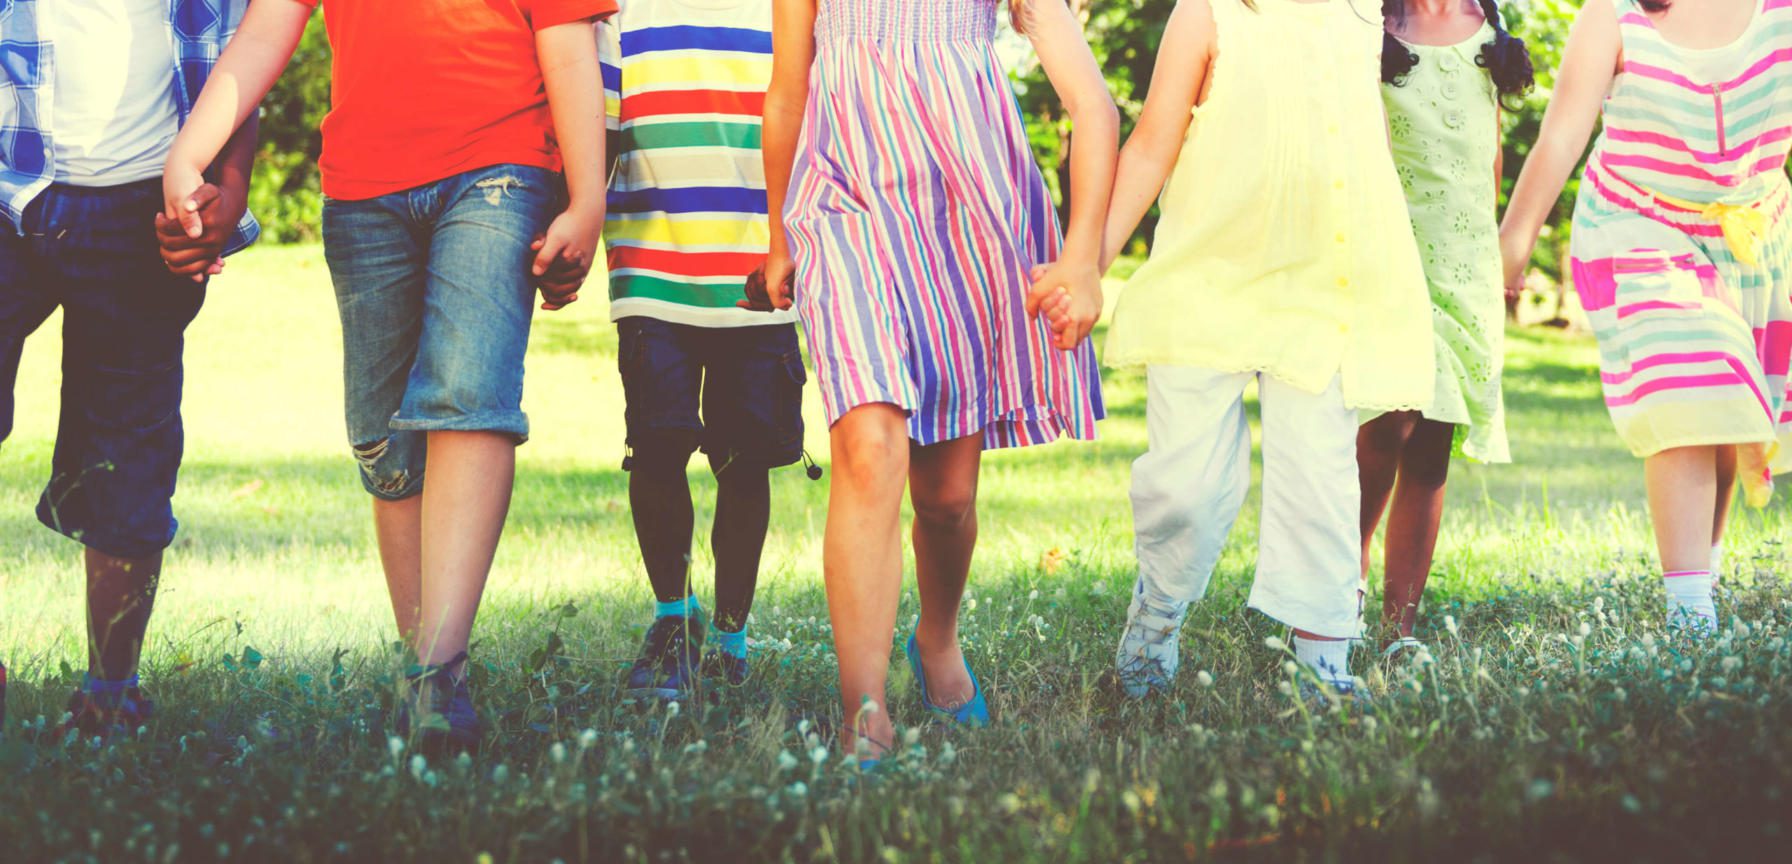 Diverse Children Friendship walking and holding hands